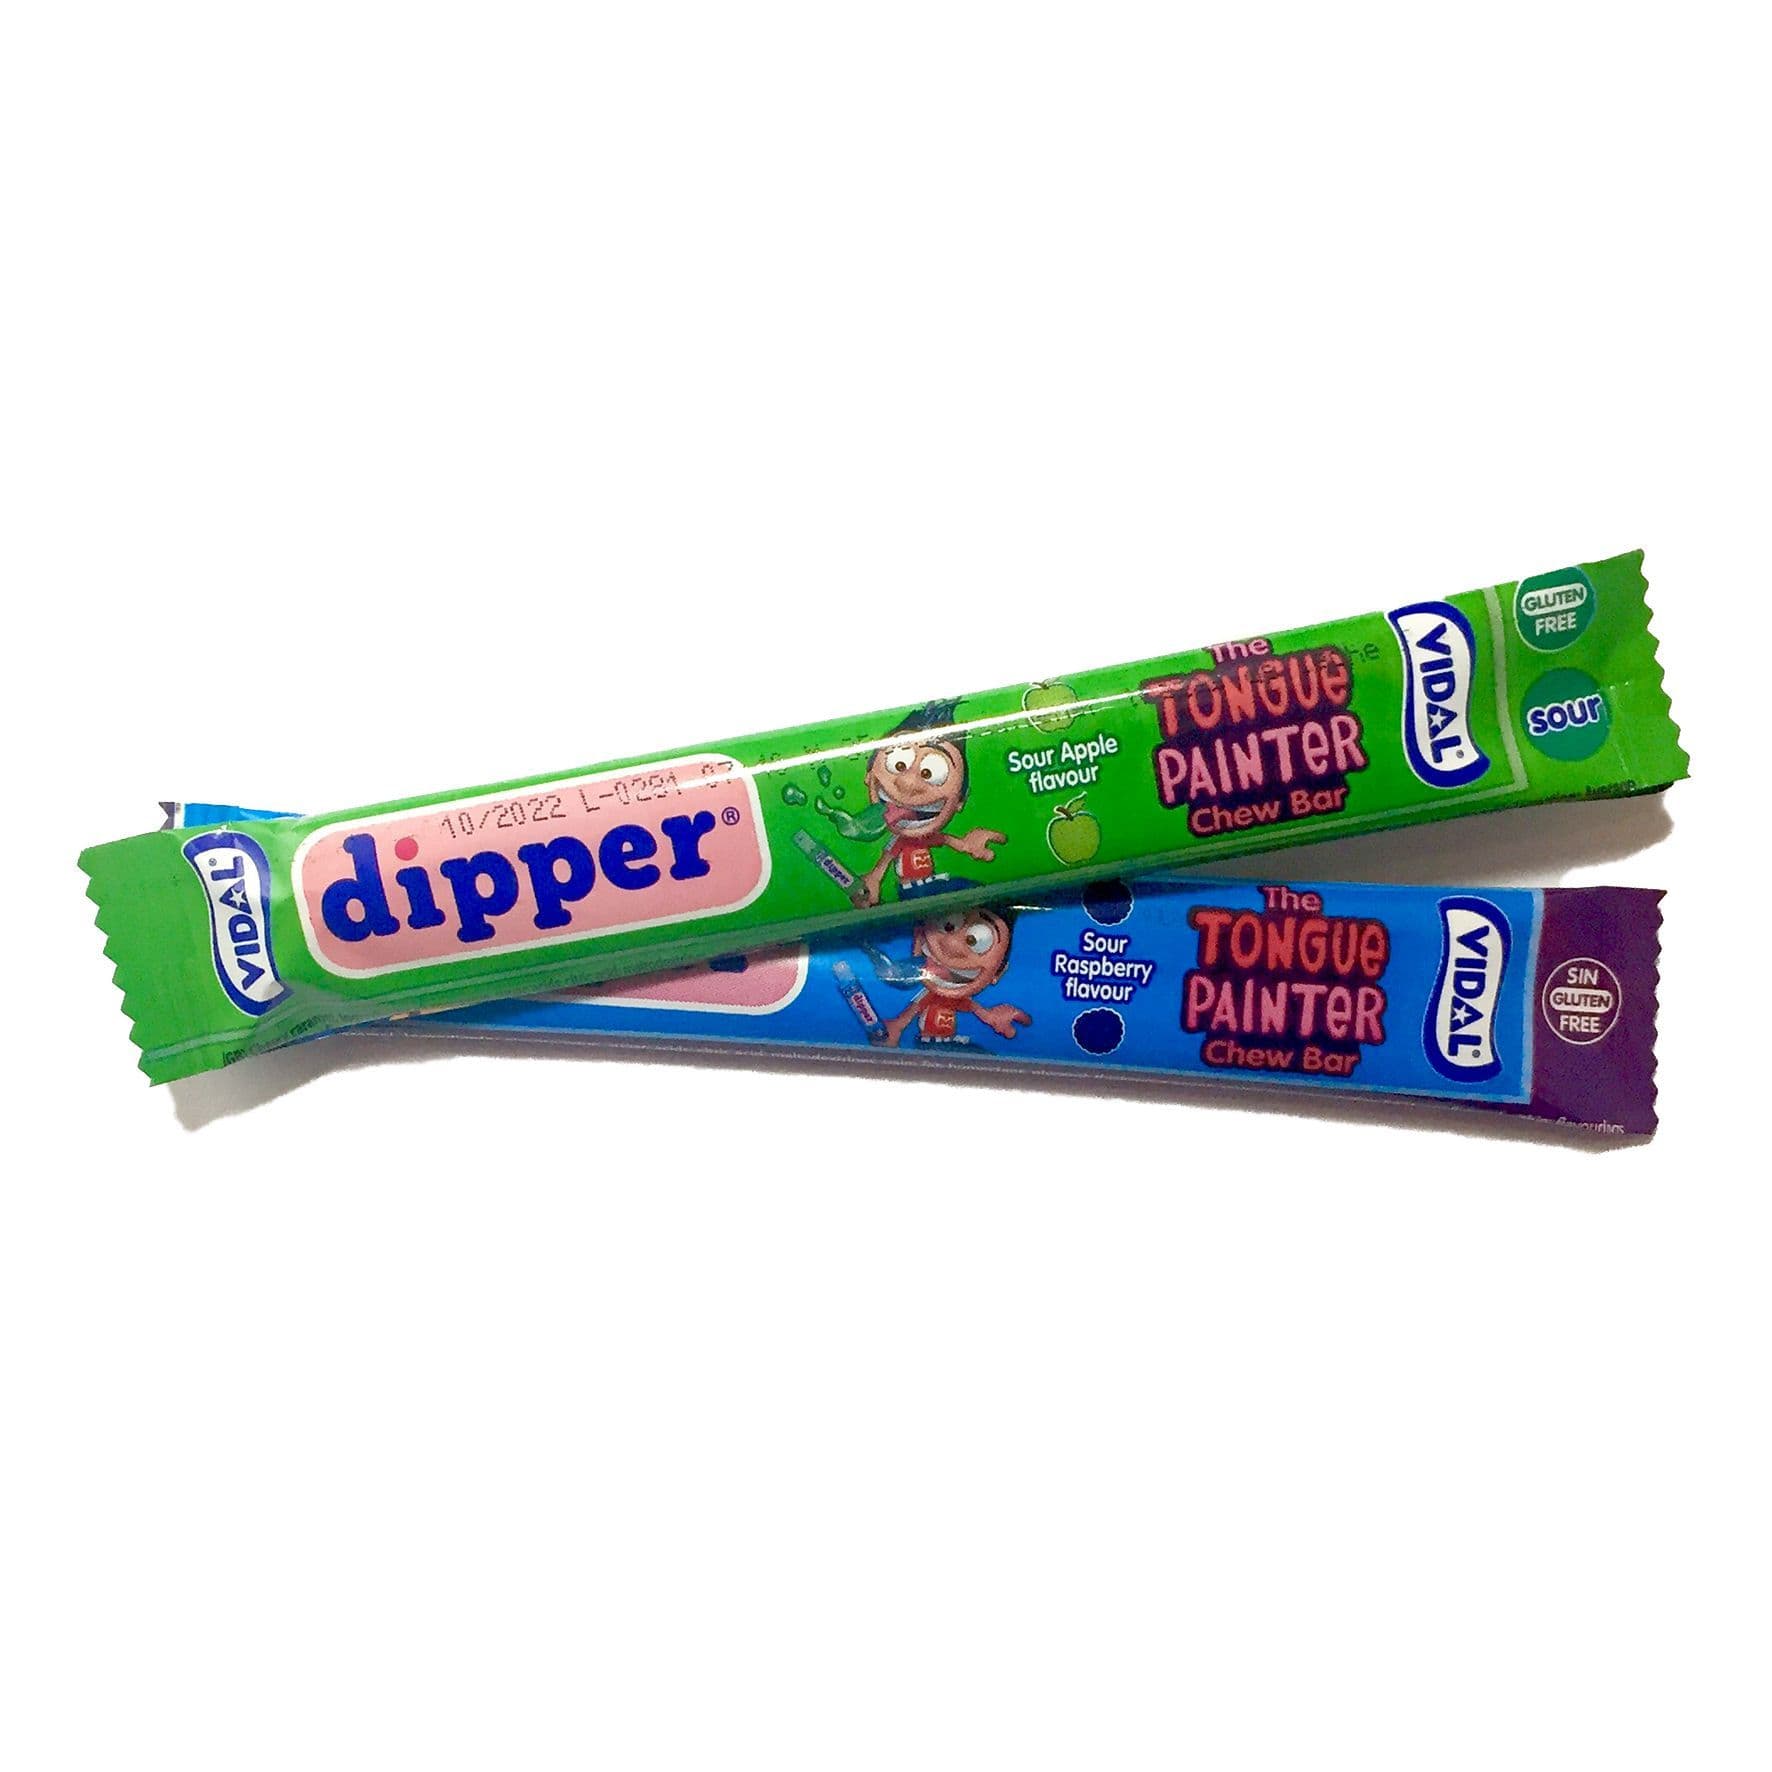 Small Dipper Tongue Painter bar